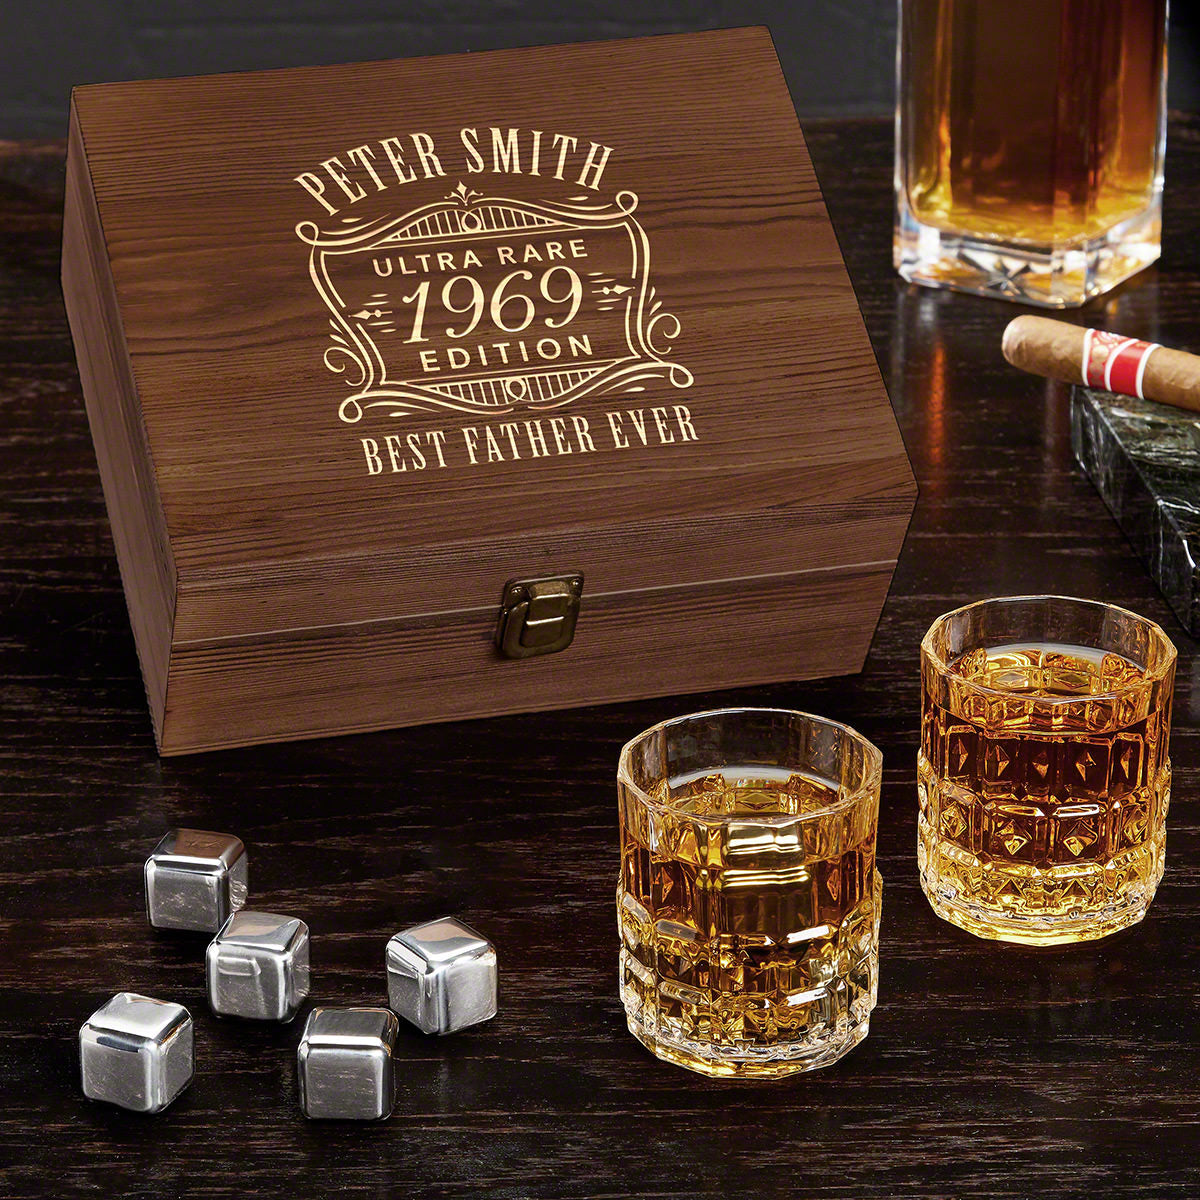 Edition Personalized Whiskey Box Set